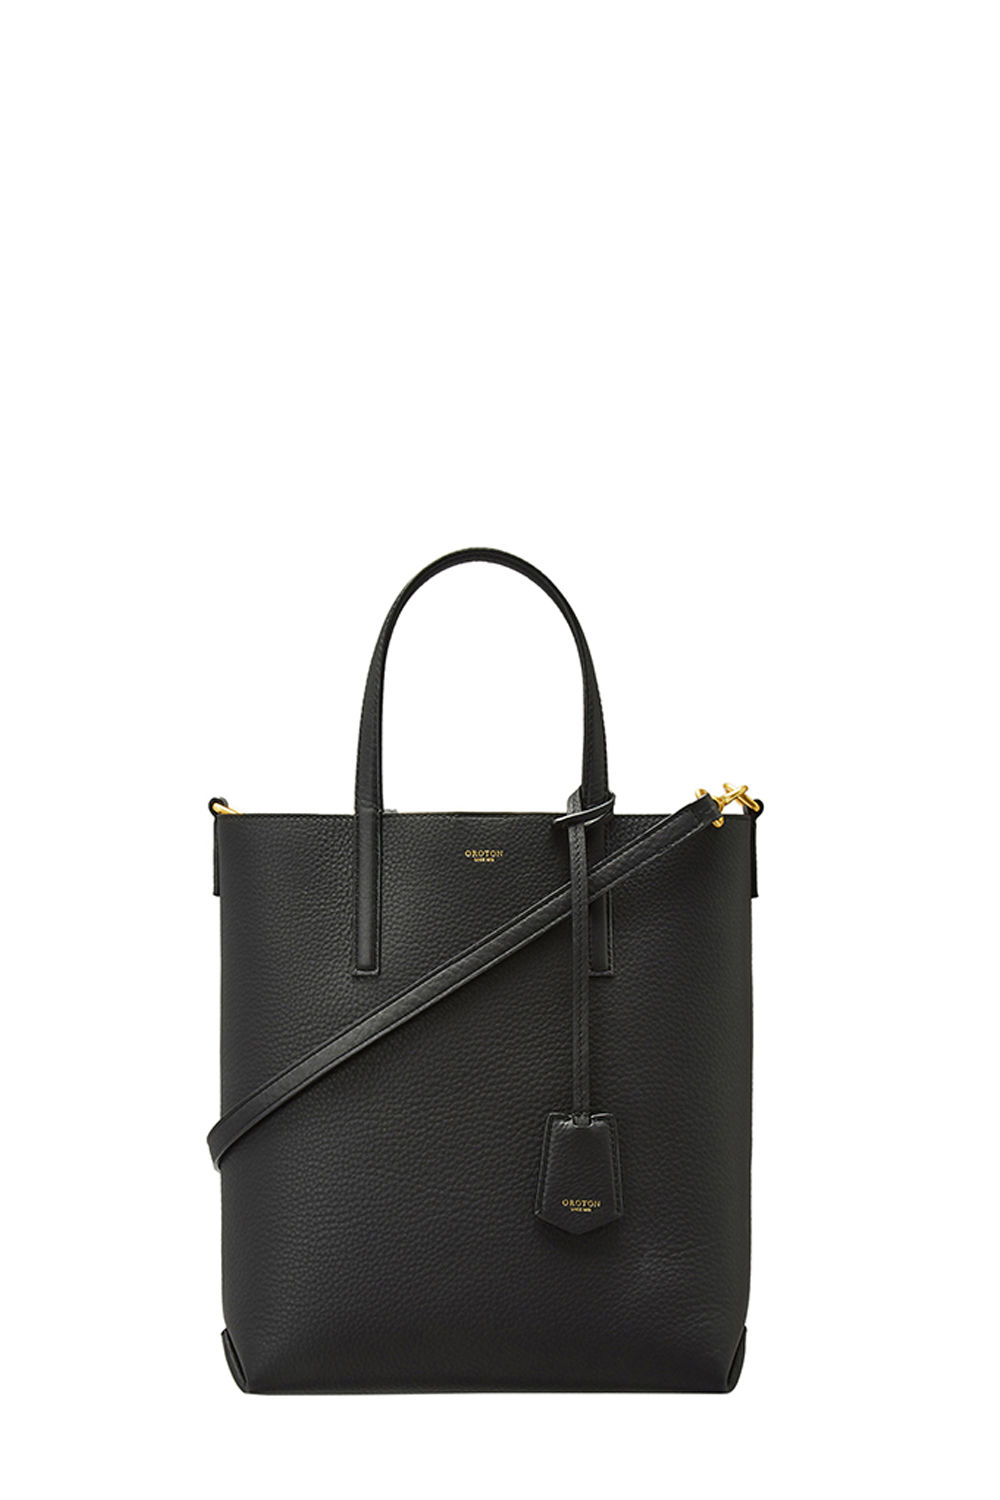 Women's Leather Crossbody Bags | Oroton Shop